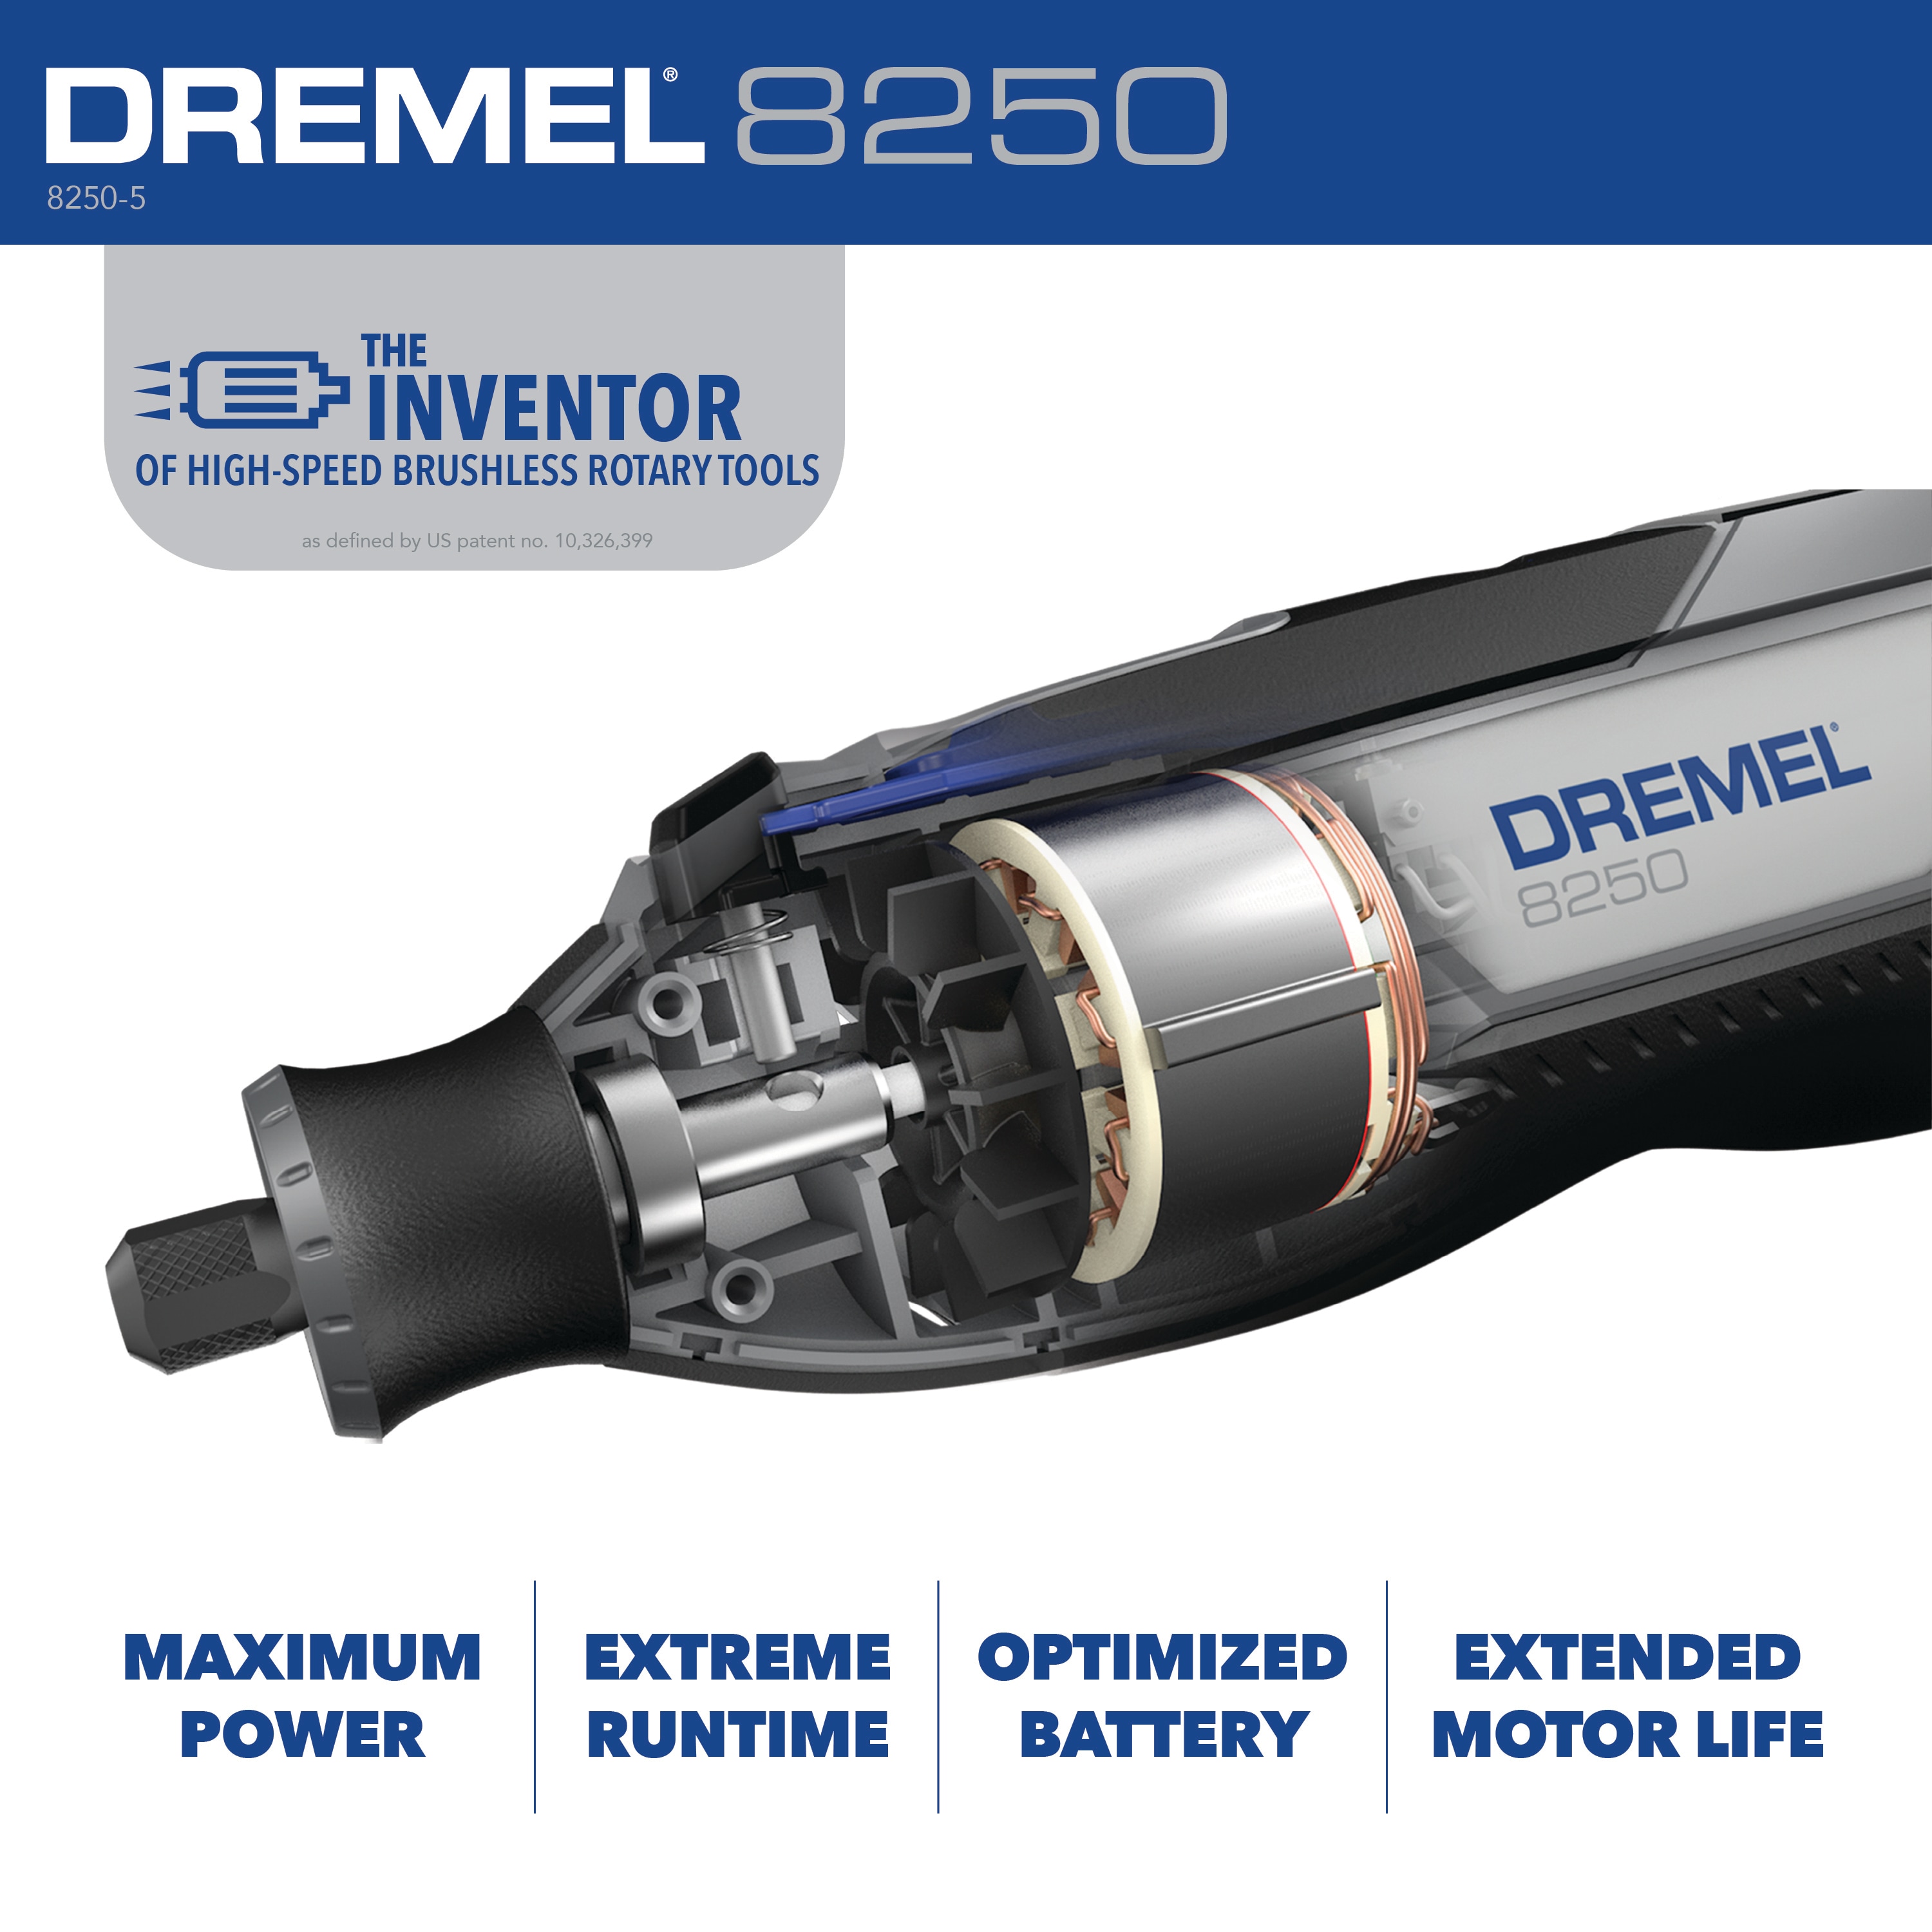 Dremel 8240 12V Cordless Rotary Tool, High Power, Maximum Versatility